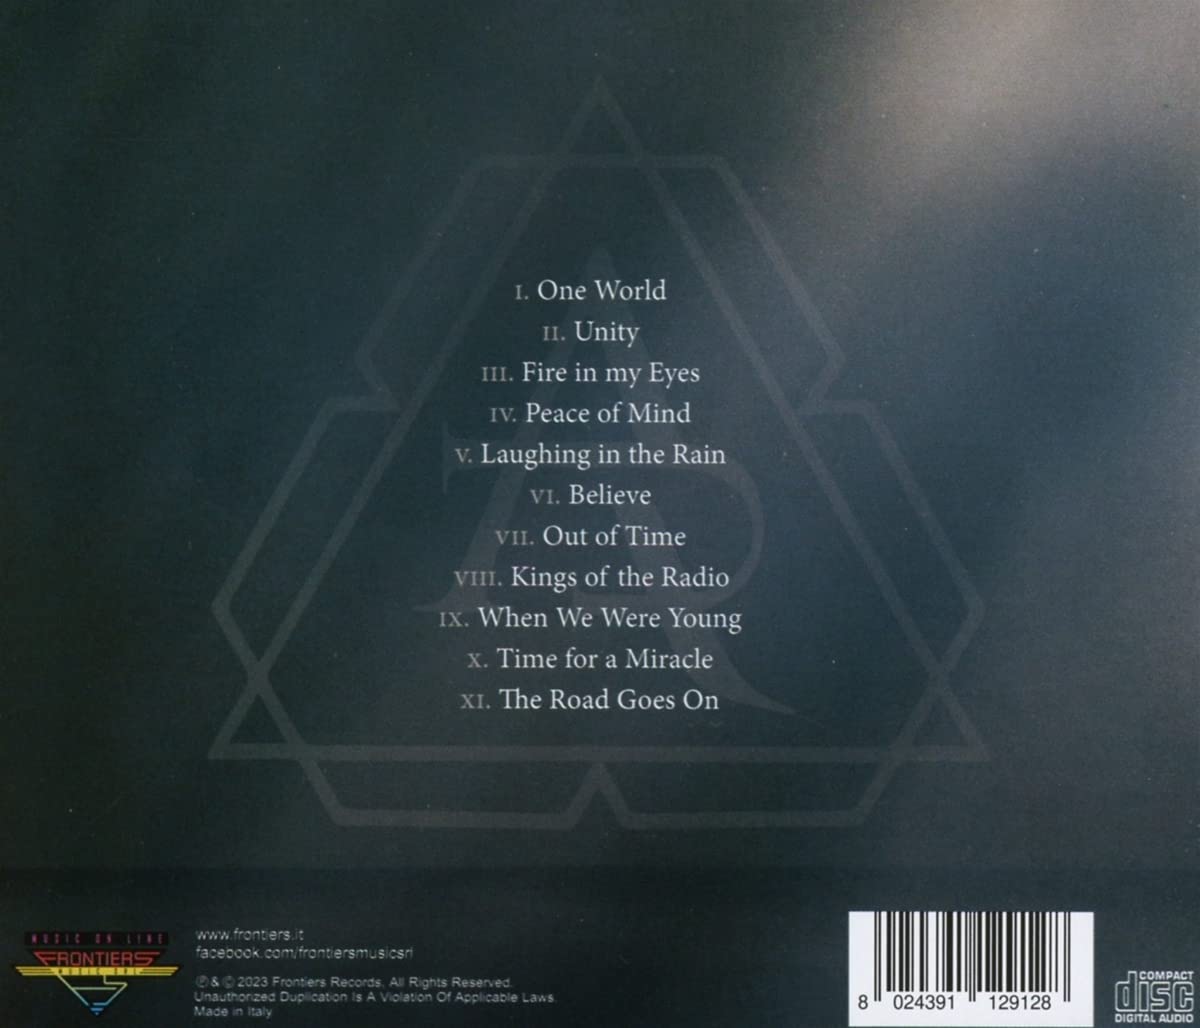 Arctic Rain Unity CD [Importado]